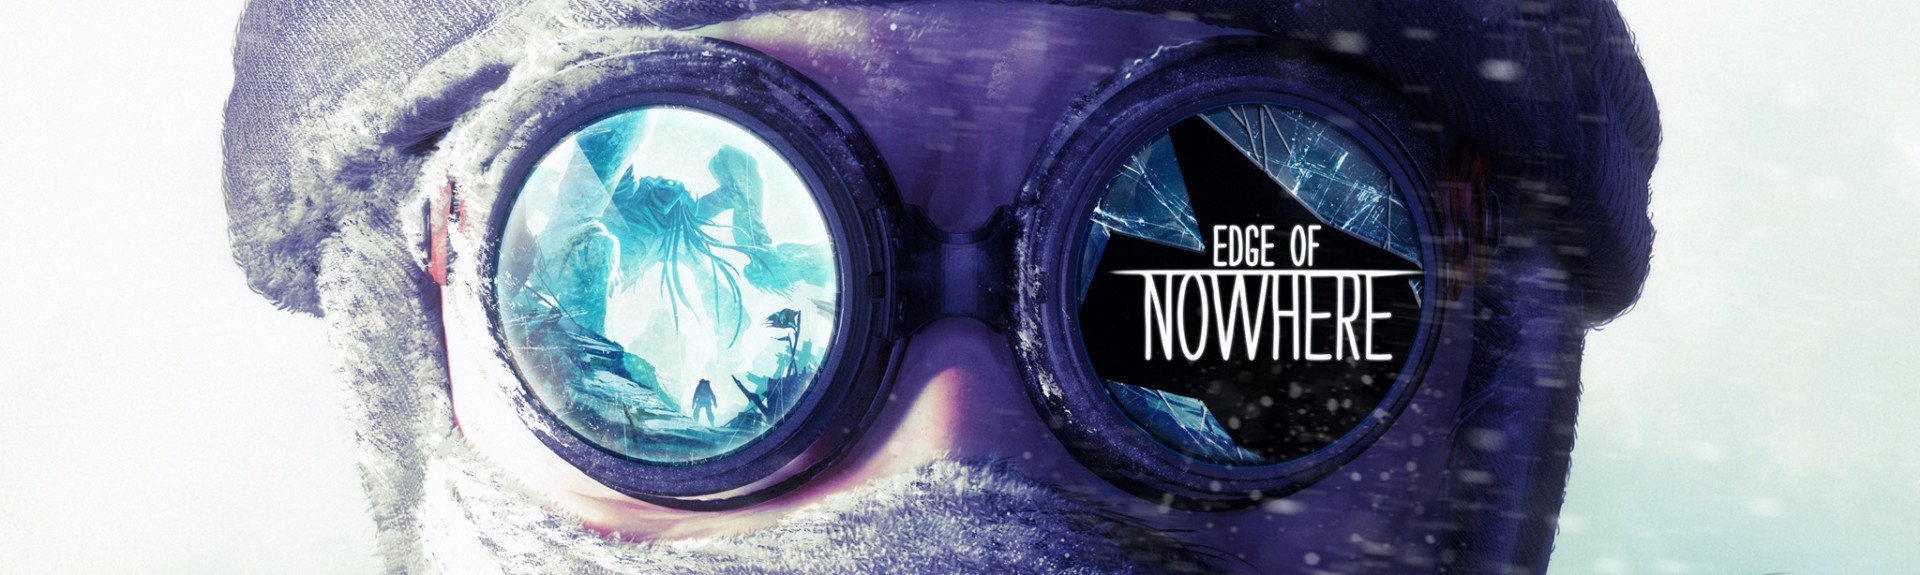 Edge of Nowhere - Oculus Rift: ANÁLISIS